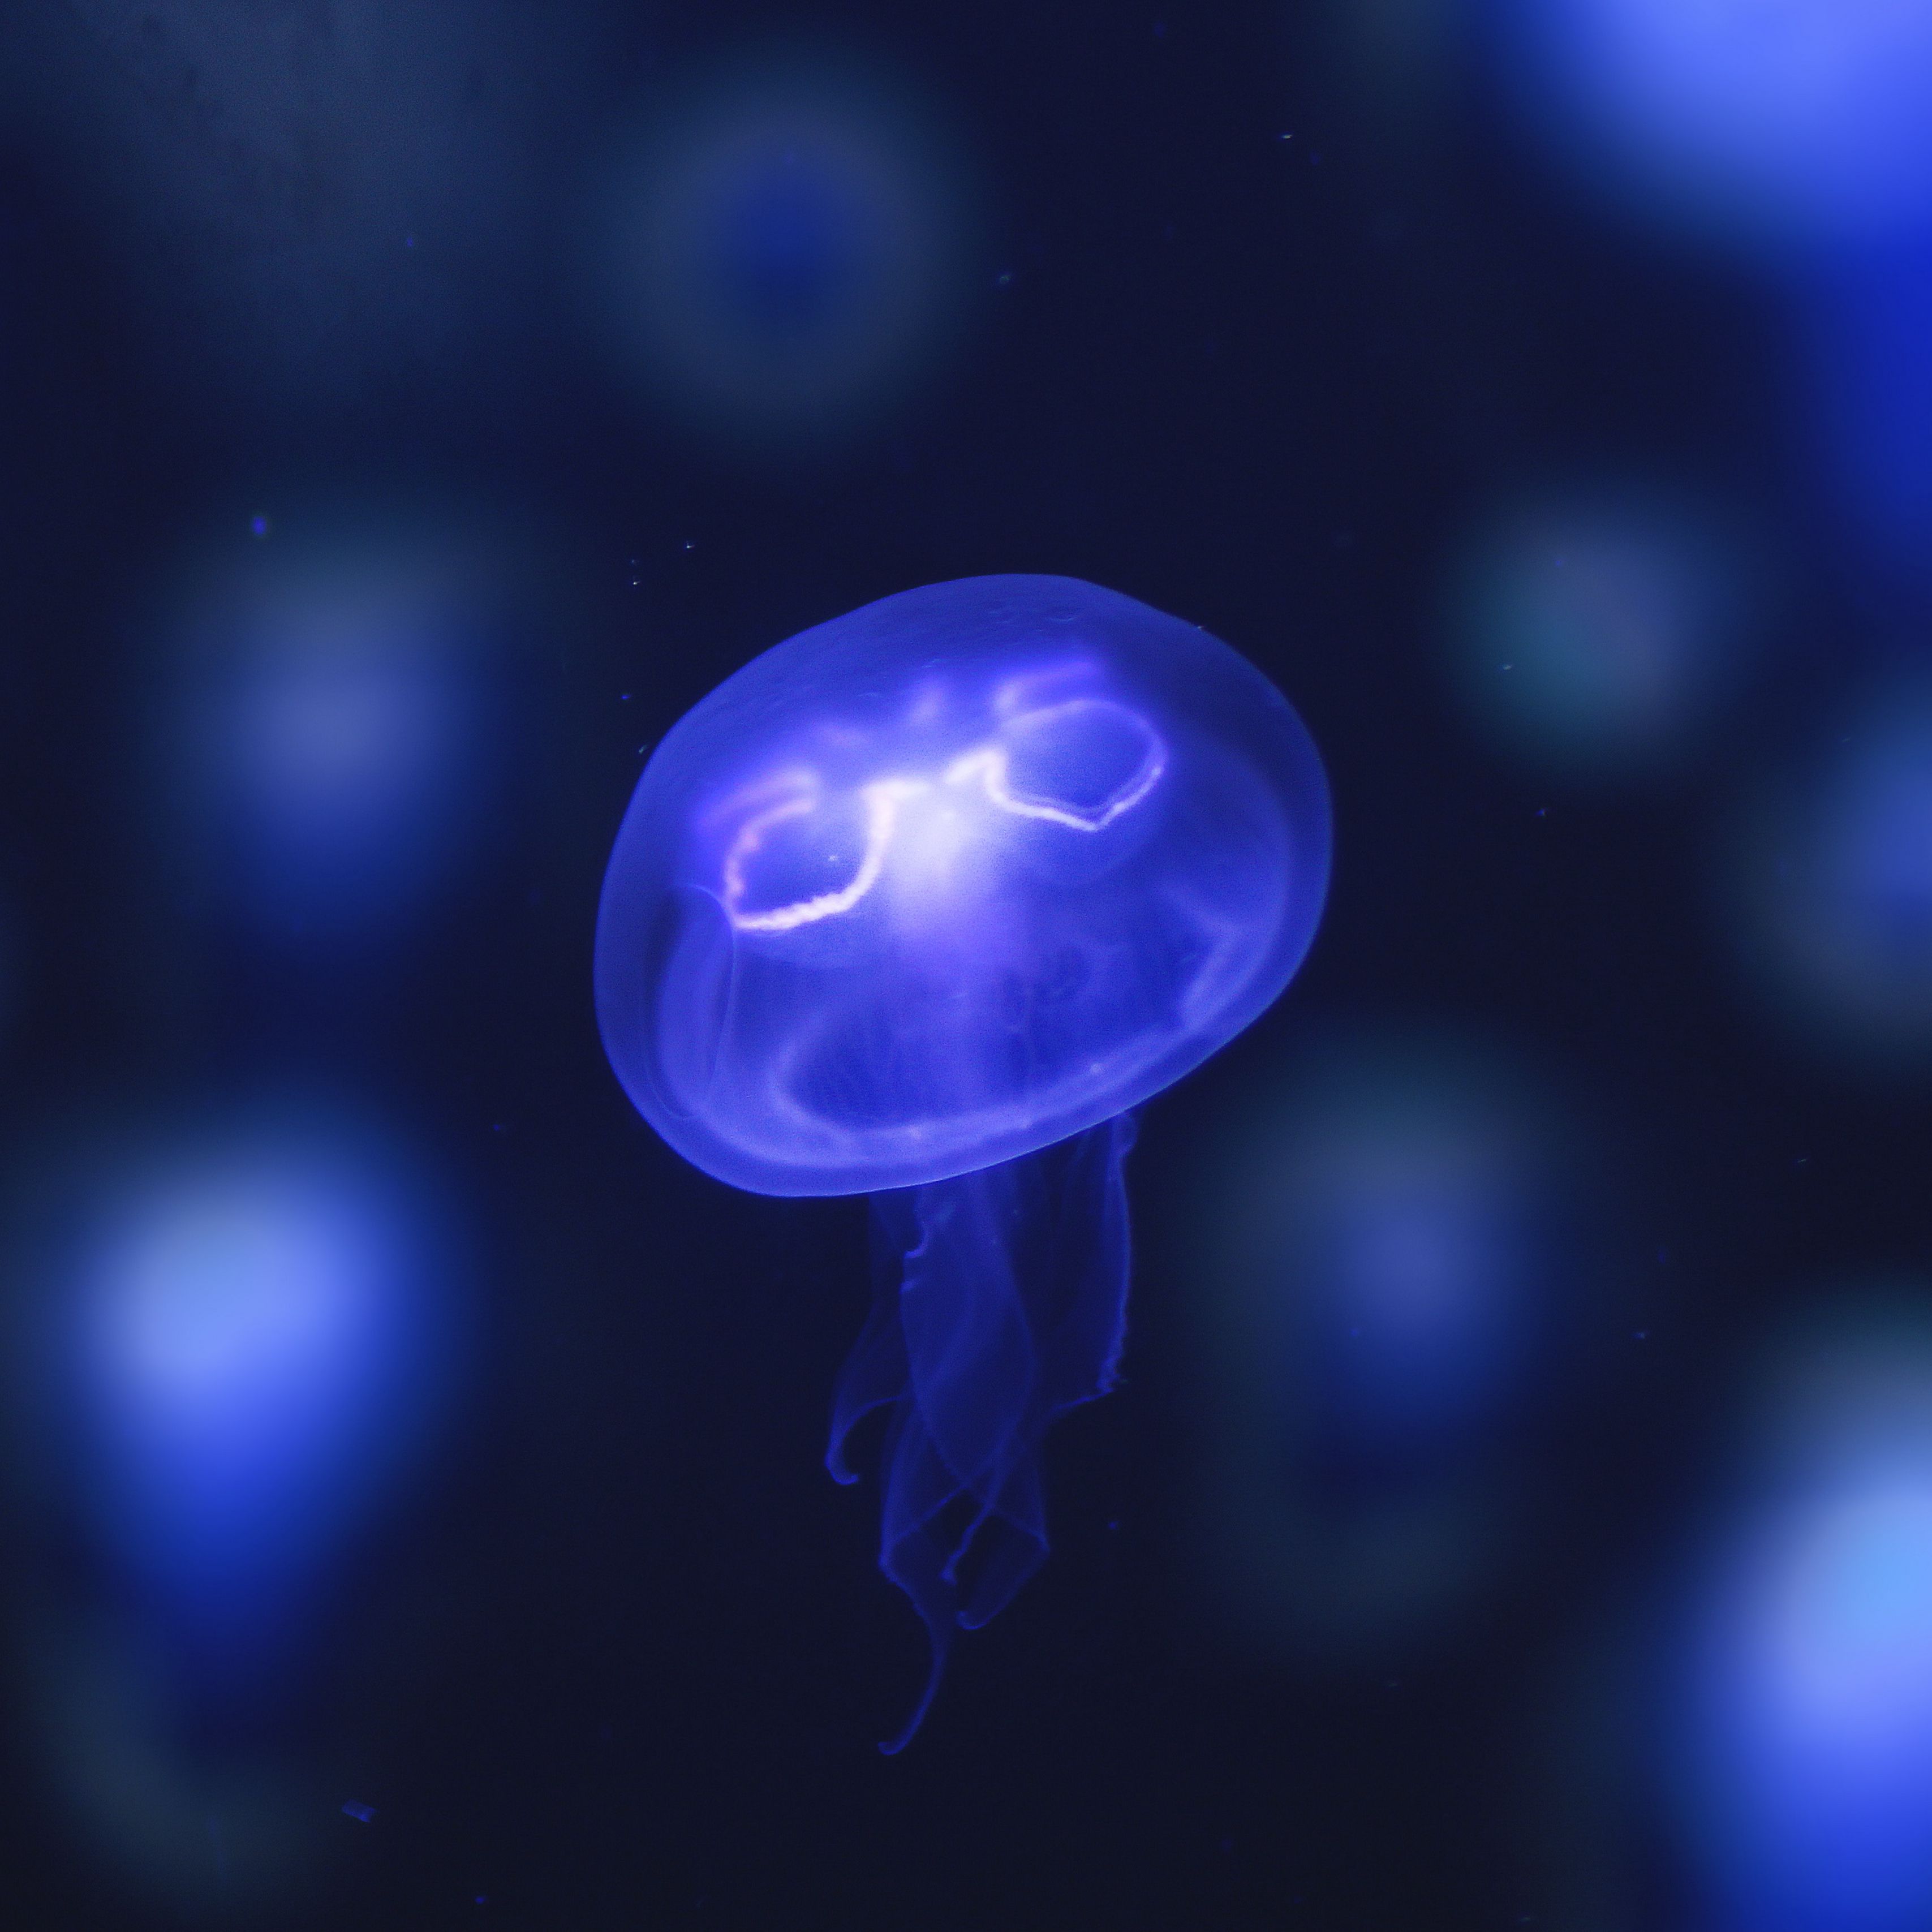 Download wallpaper 3415x3415 jellyfish, glow, purple, neon, underwater  world ipad pro 